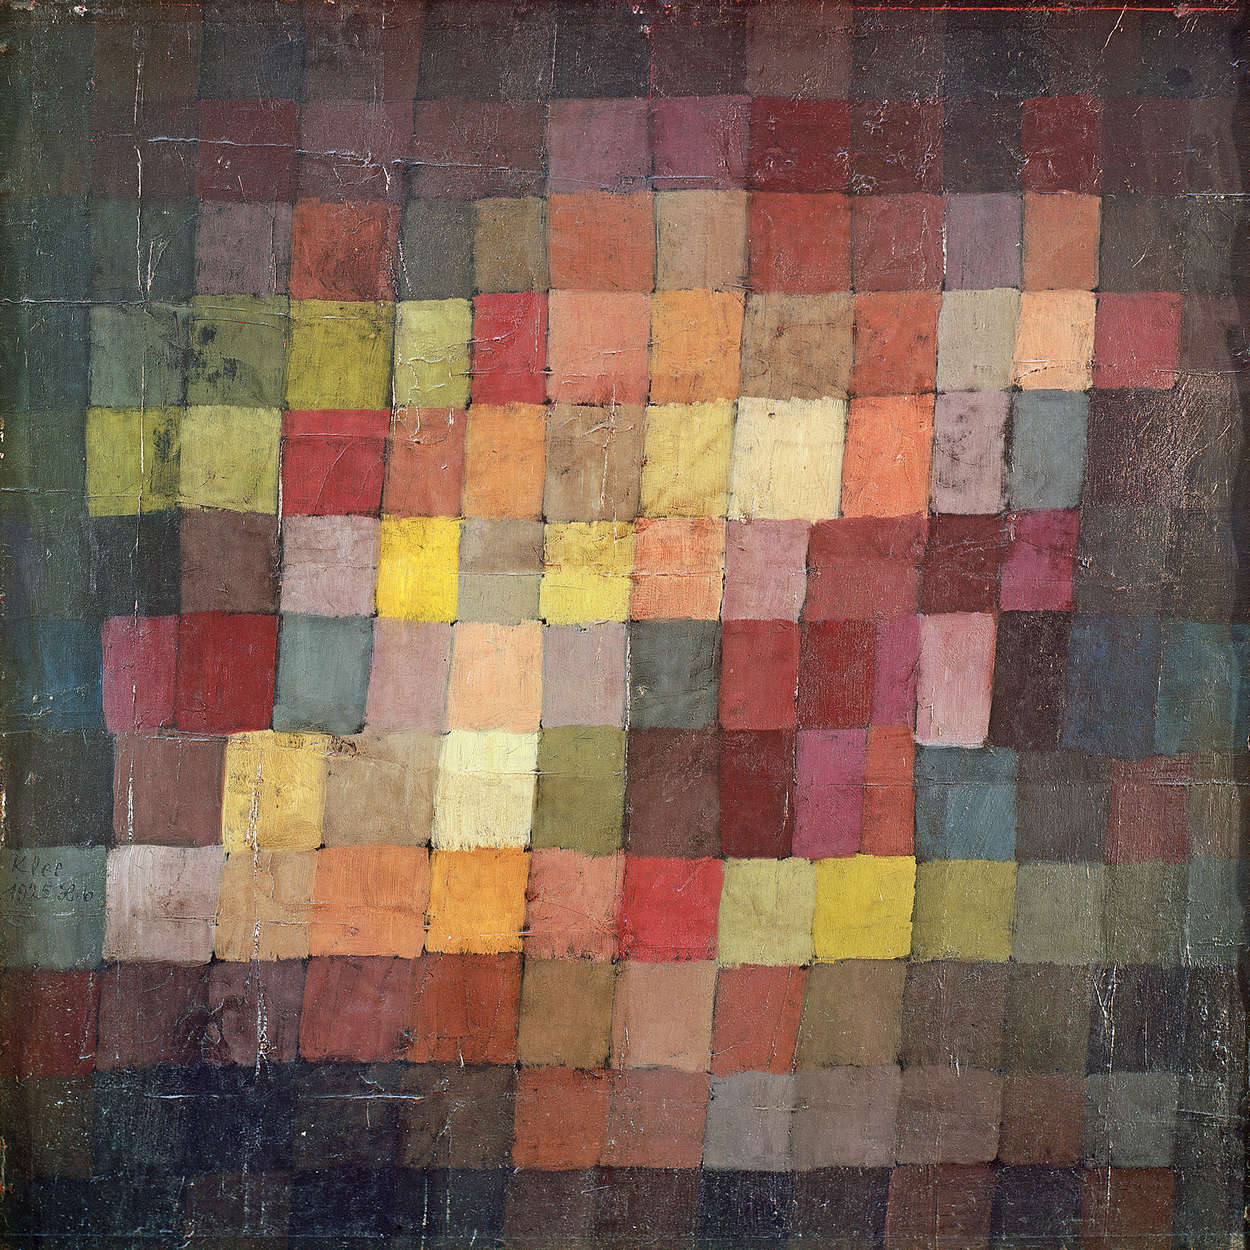             Mural "Old Harmony" de Paul Klee
        